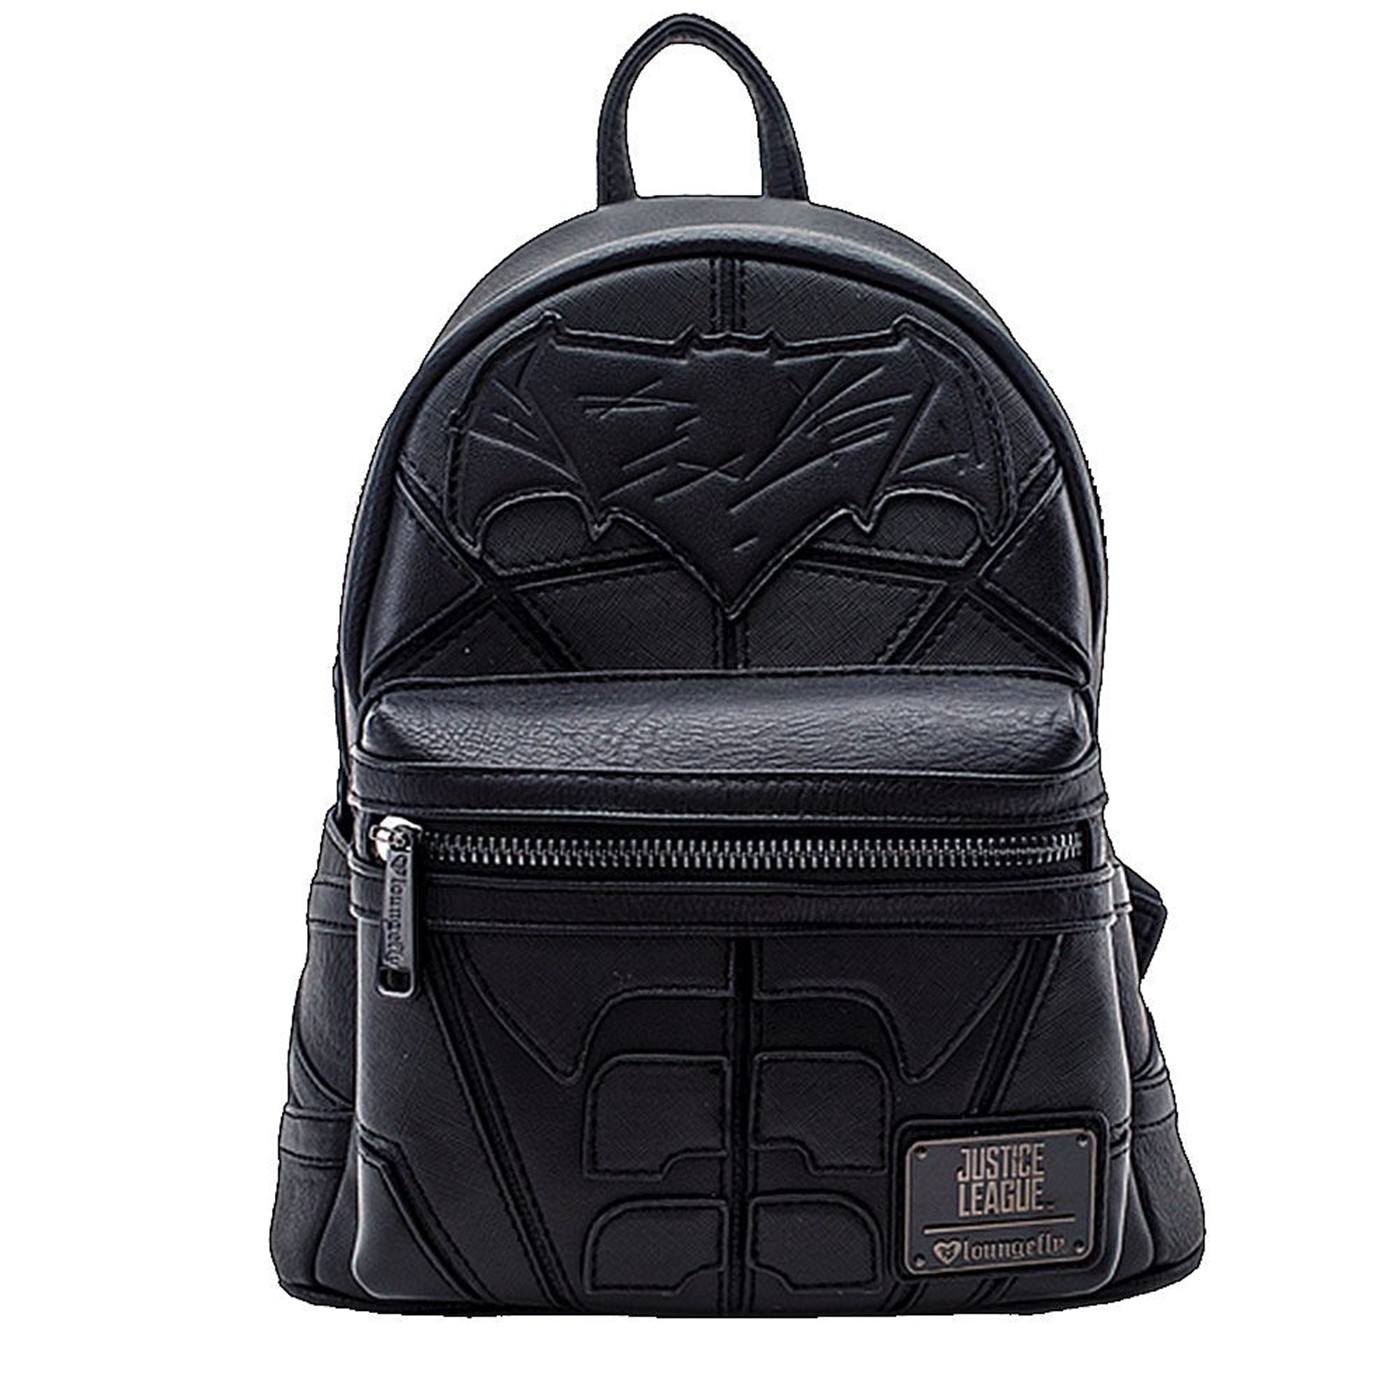 Batman Justice League Armor Mini Backpack